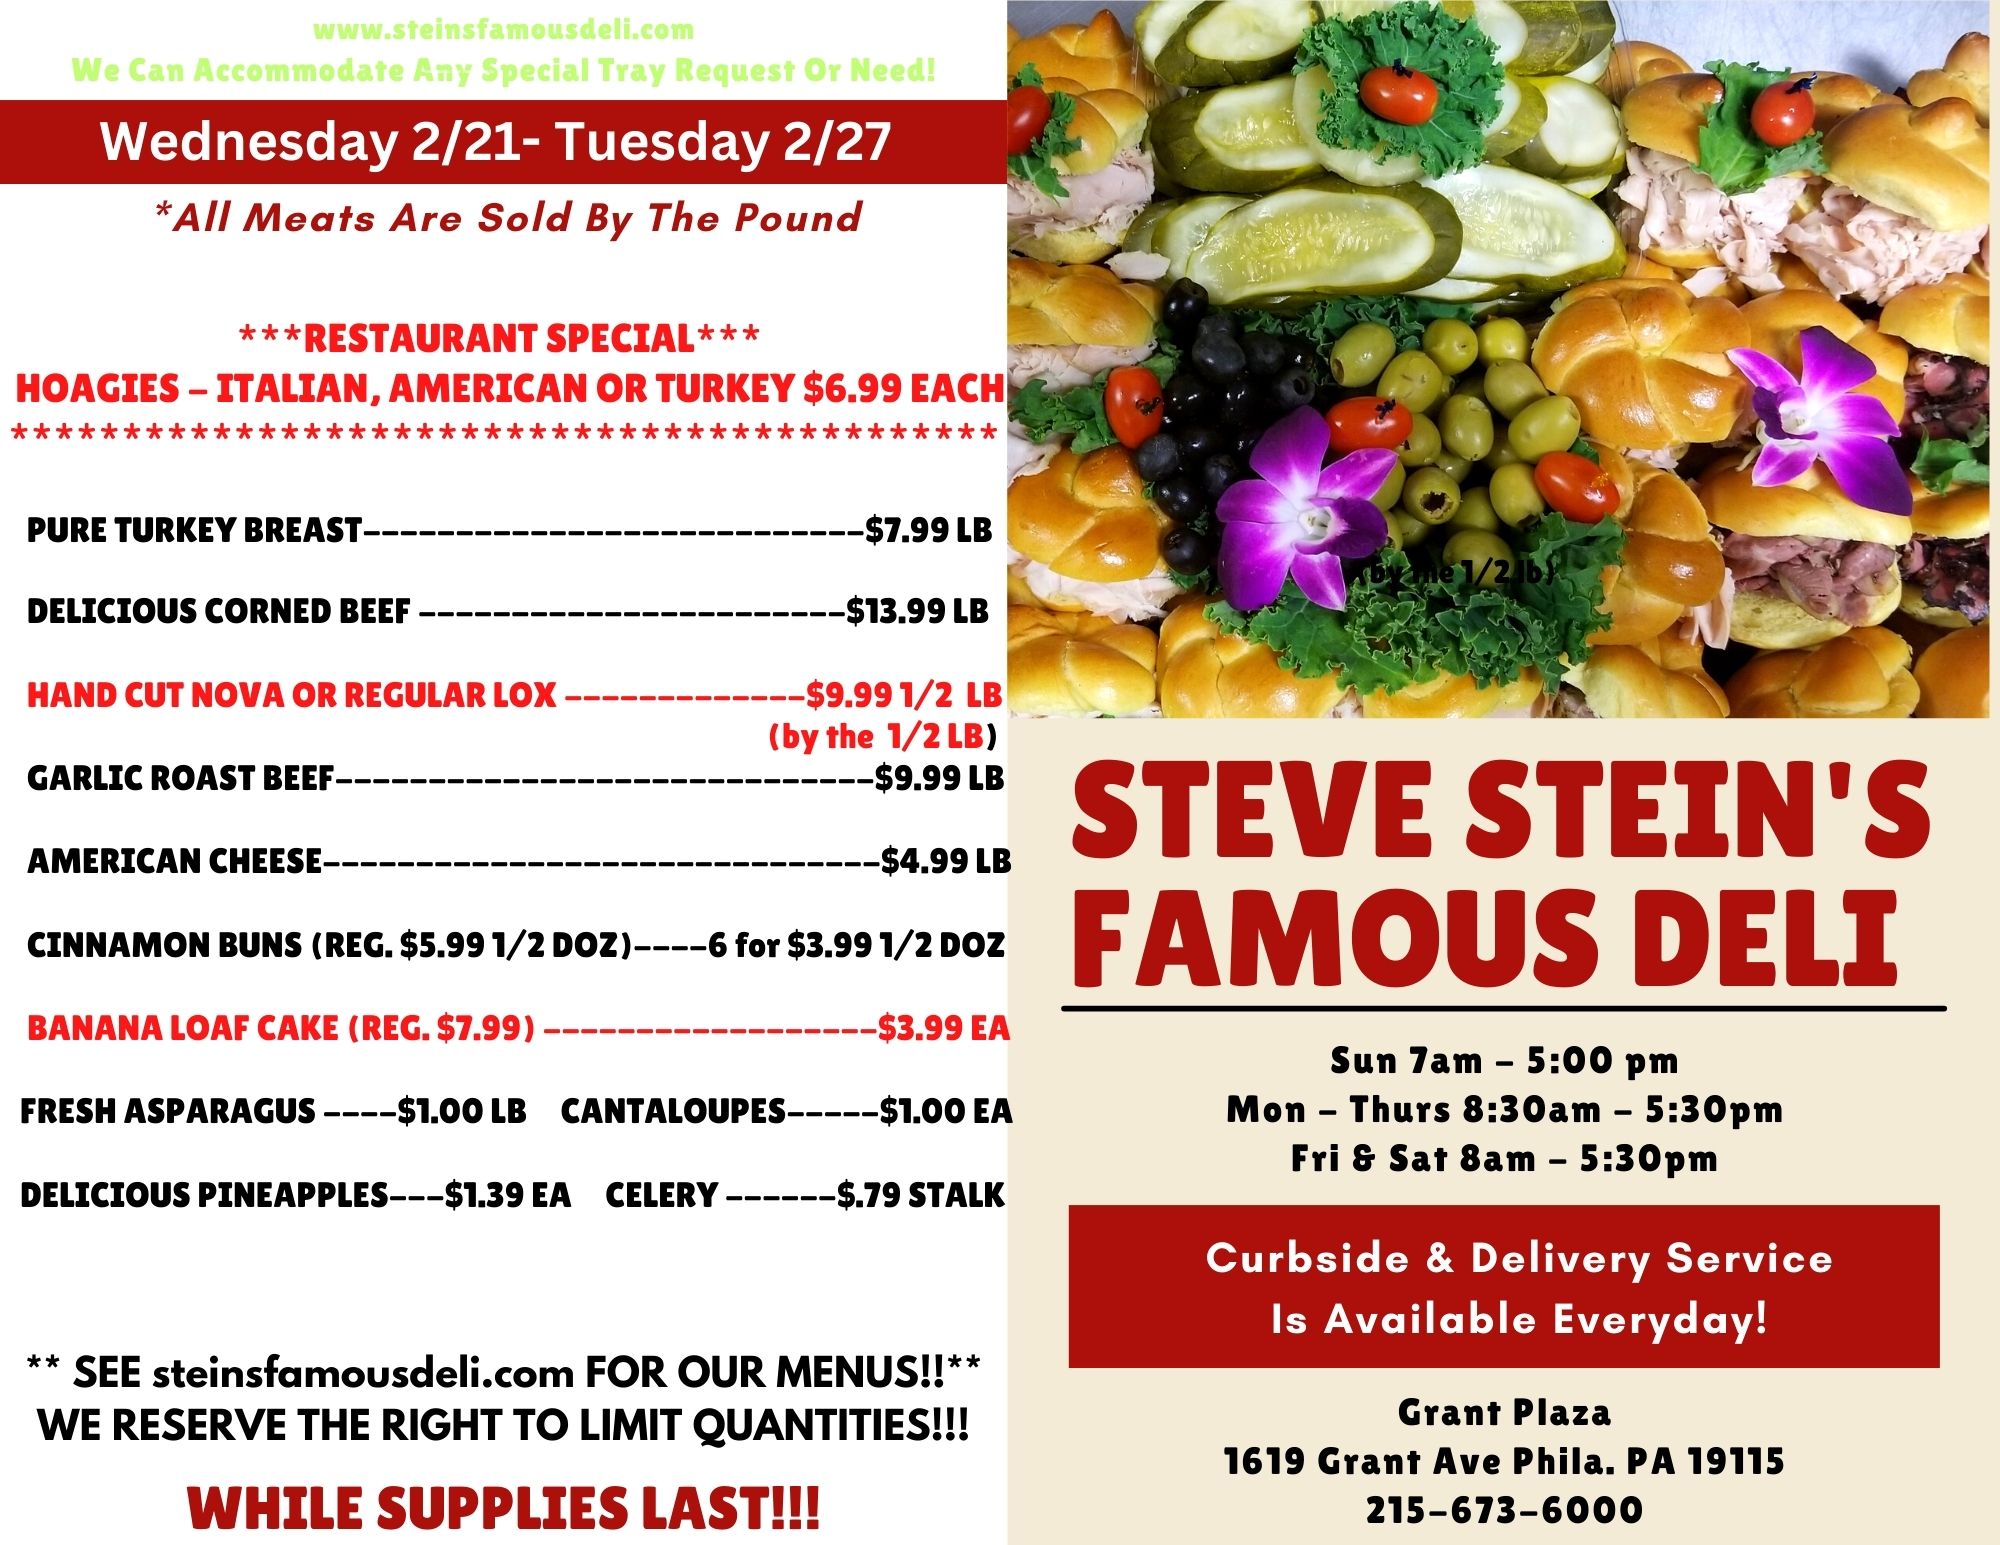 A flyer for steve stein's famous deli.